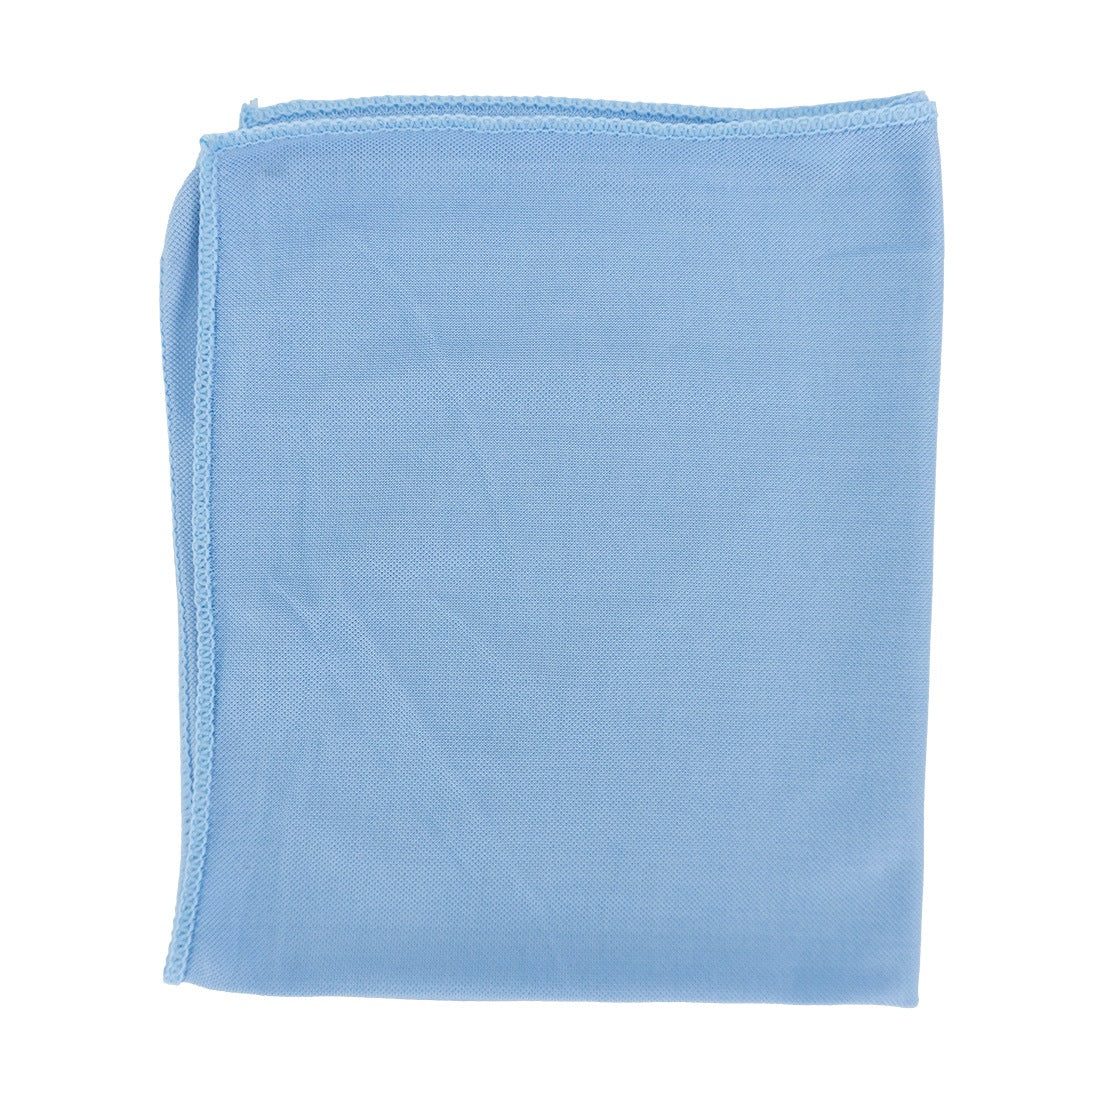 XERO Jolt Microfiber Towel Folded Front View